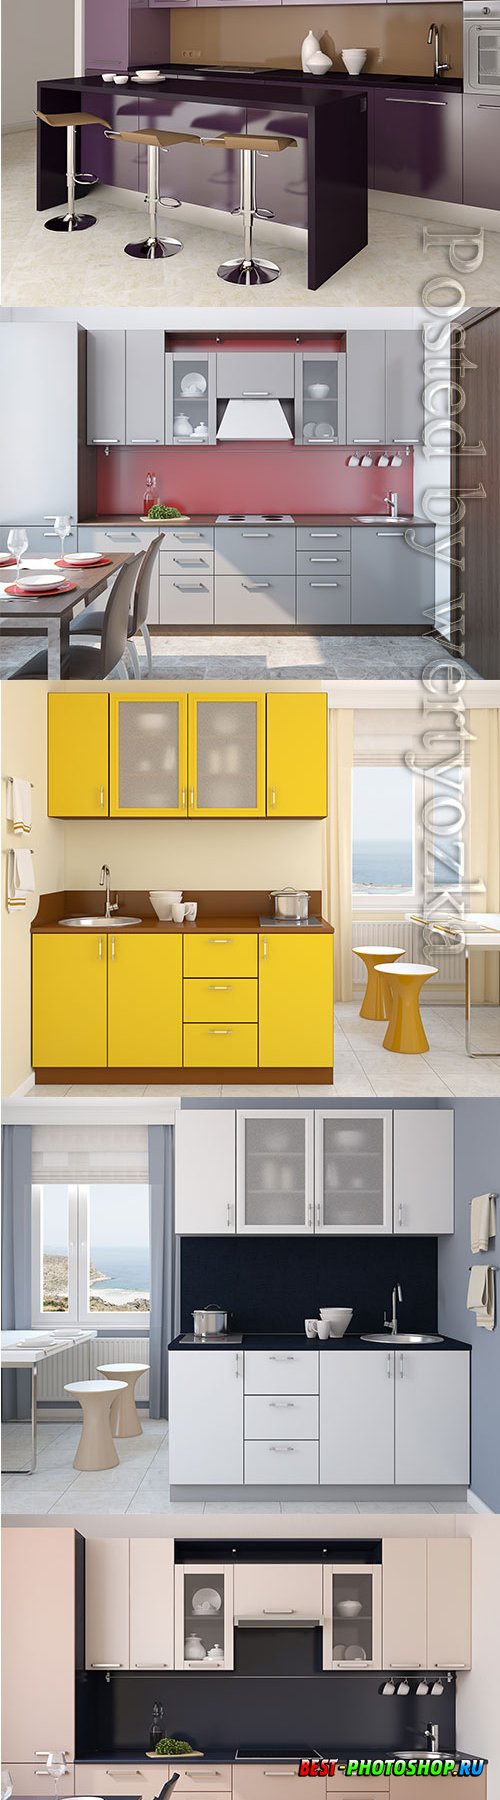 Stylish kitchen interior stock photo